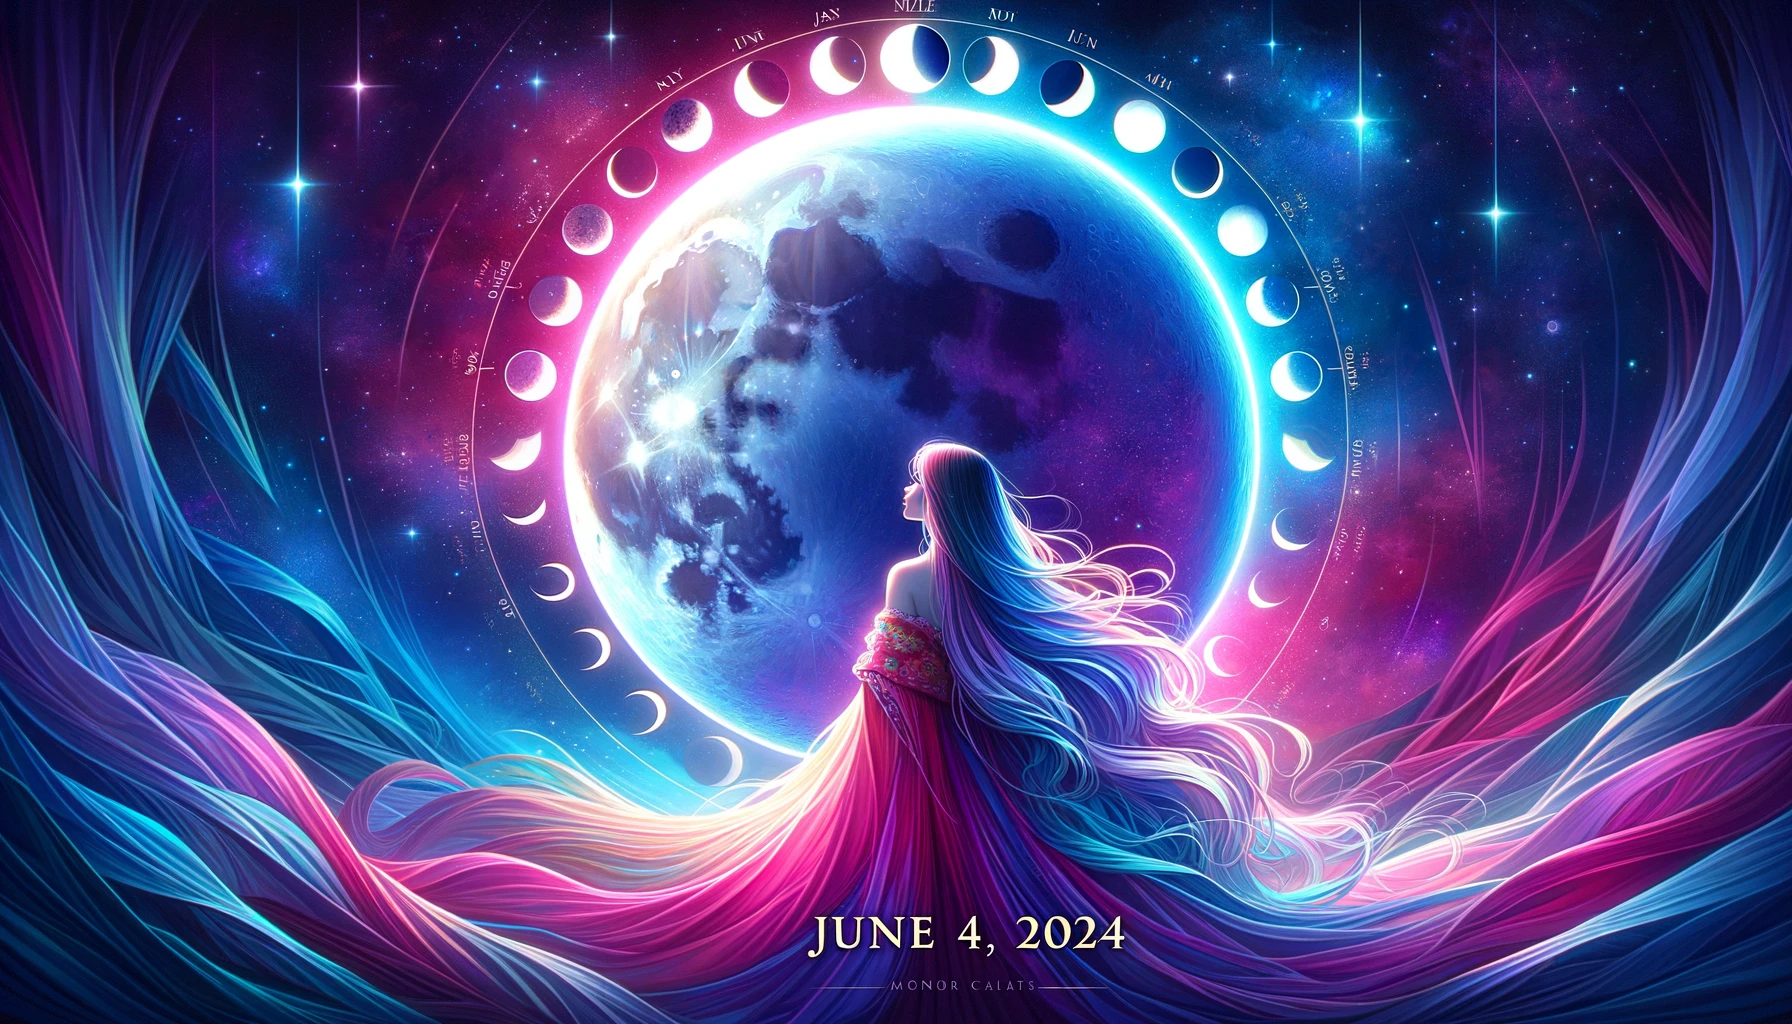 June 4 Lunar calendar, Moon Phases